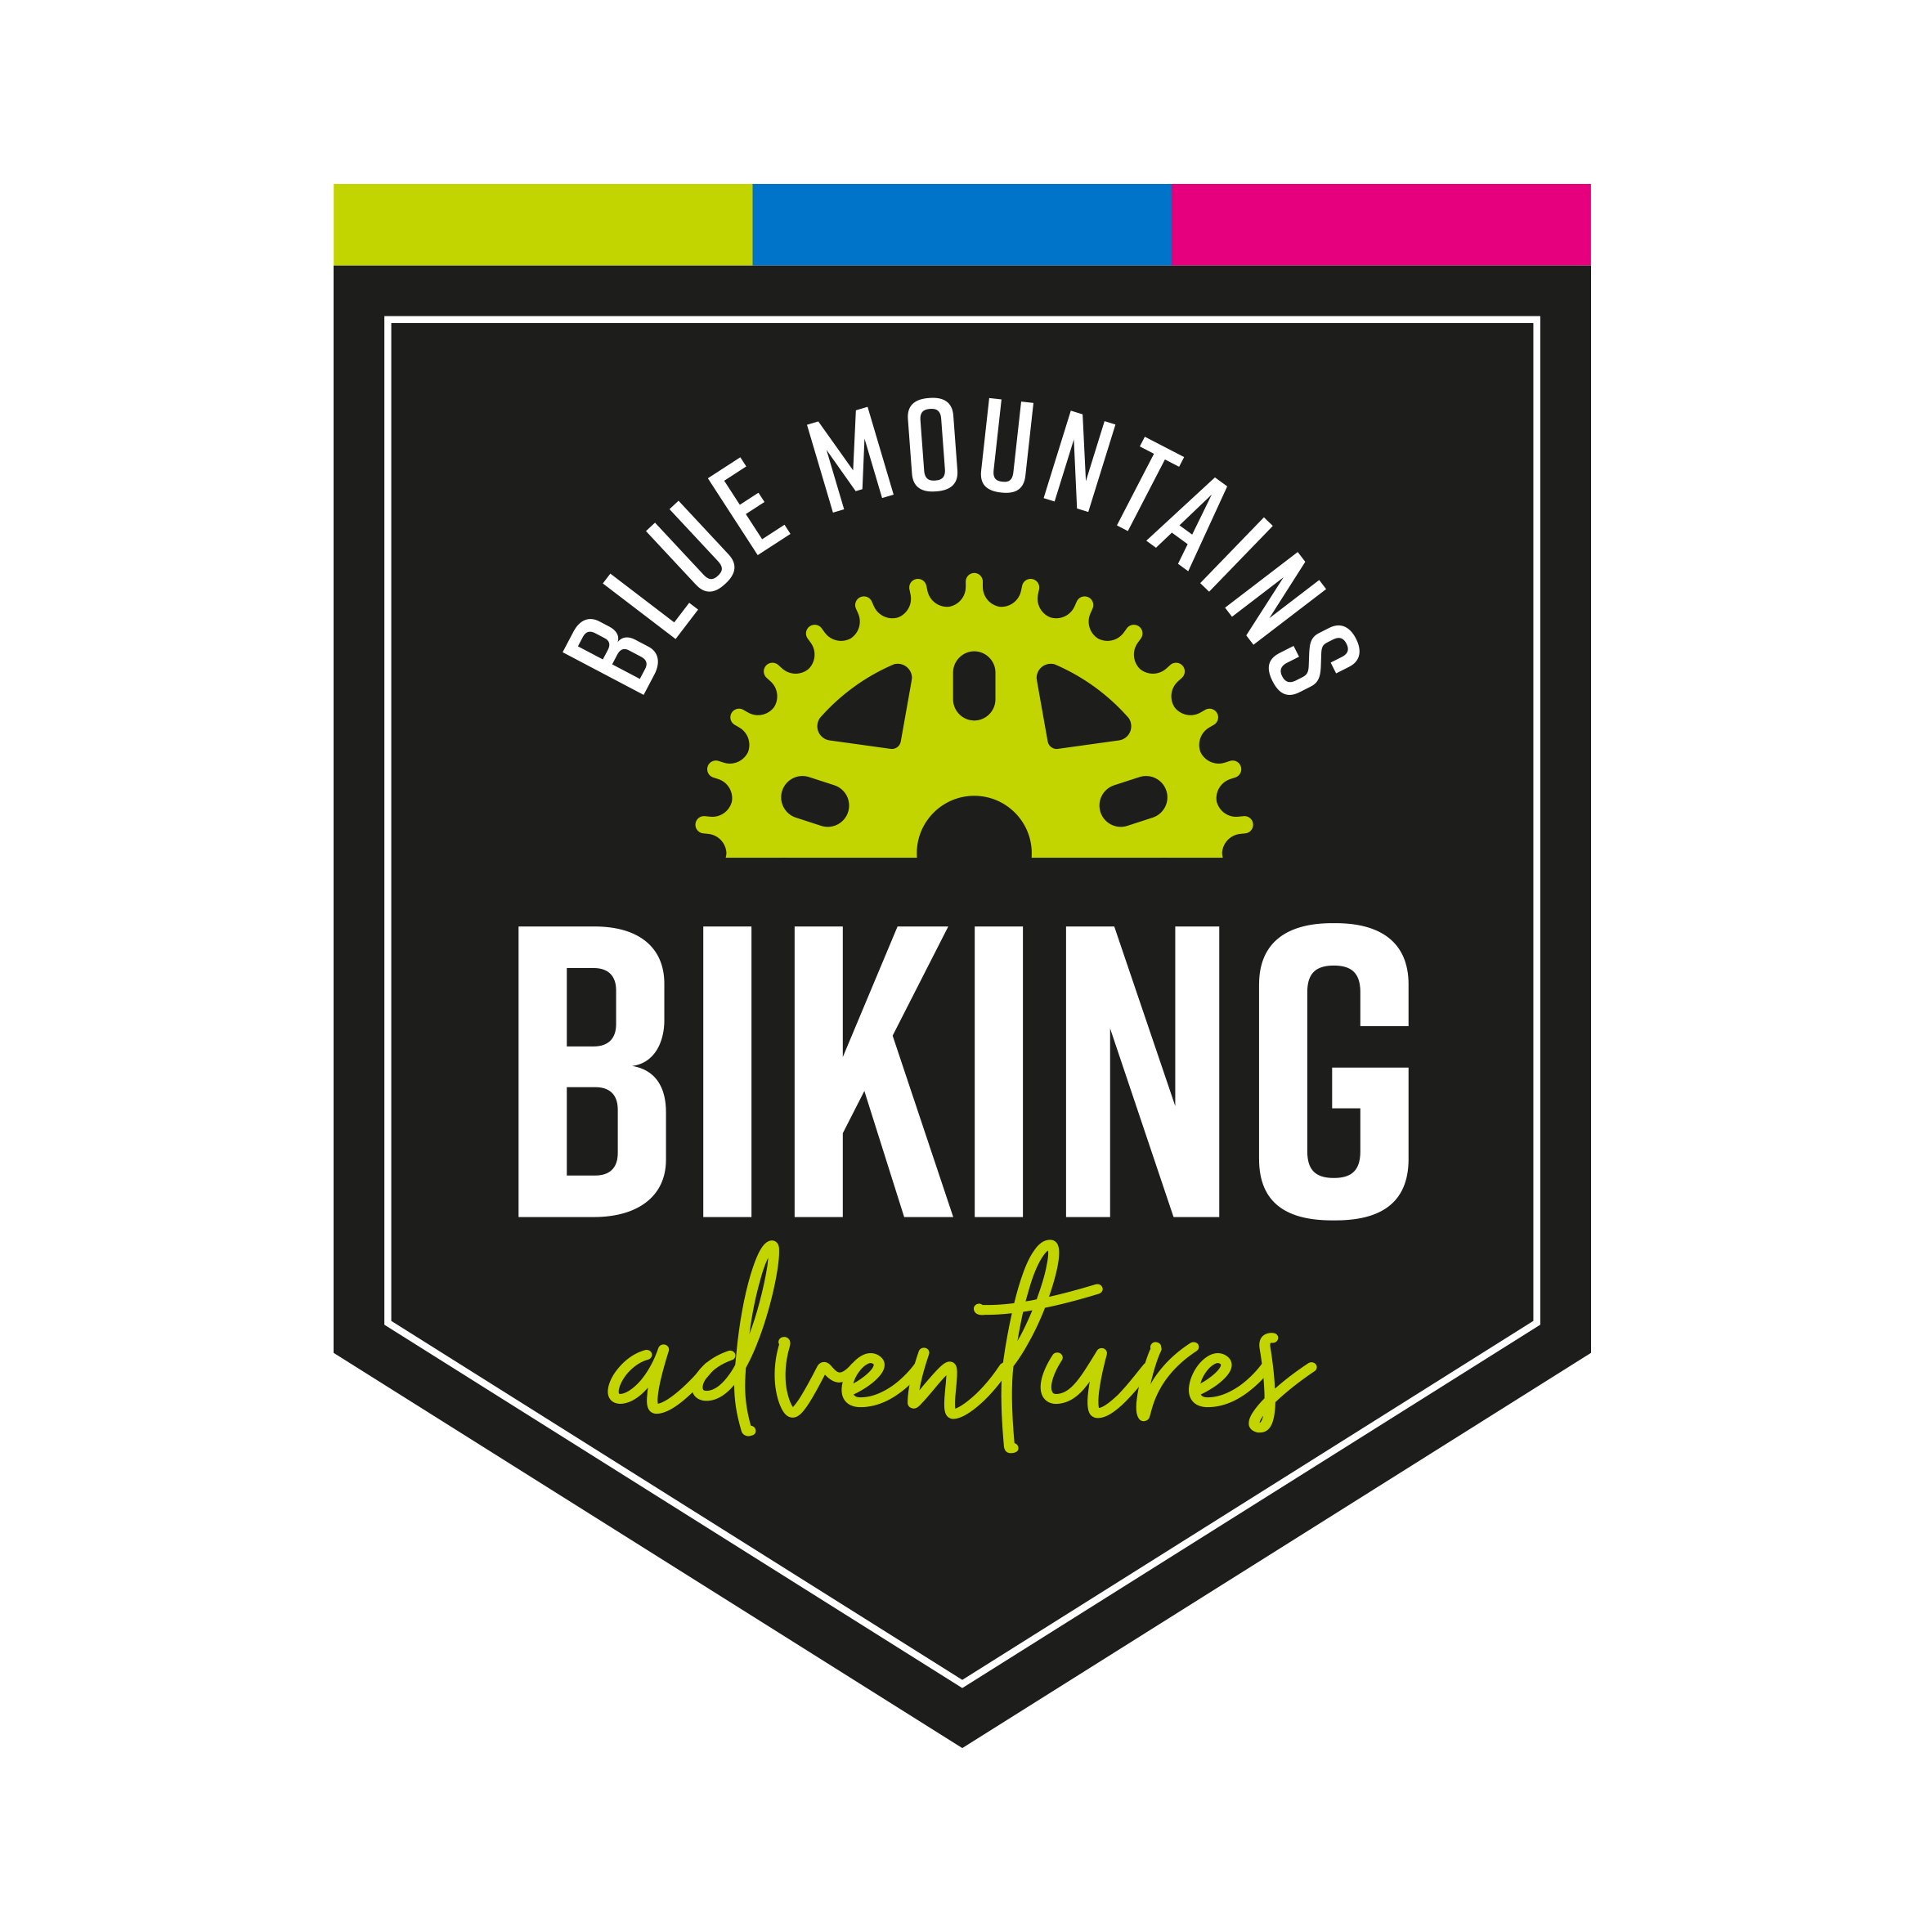 Blue Mountains Biking Adventures